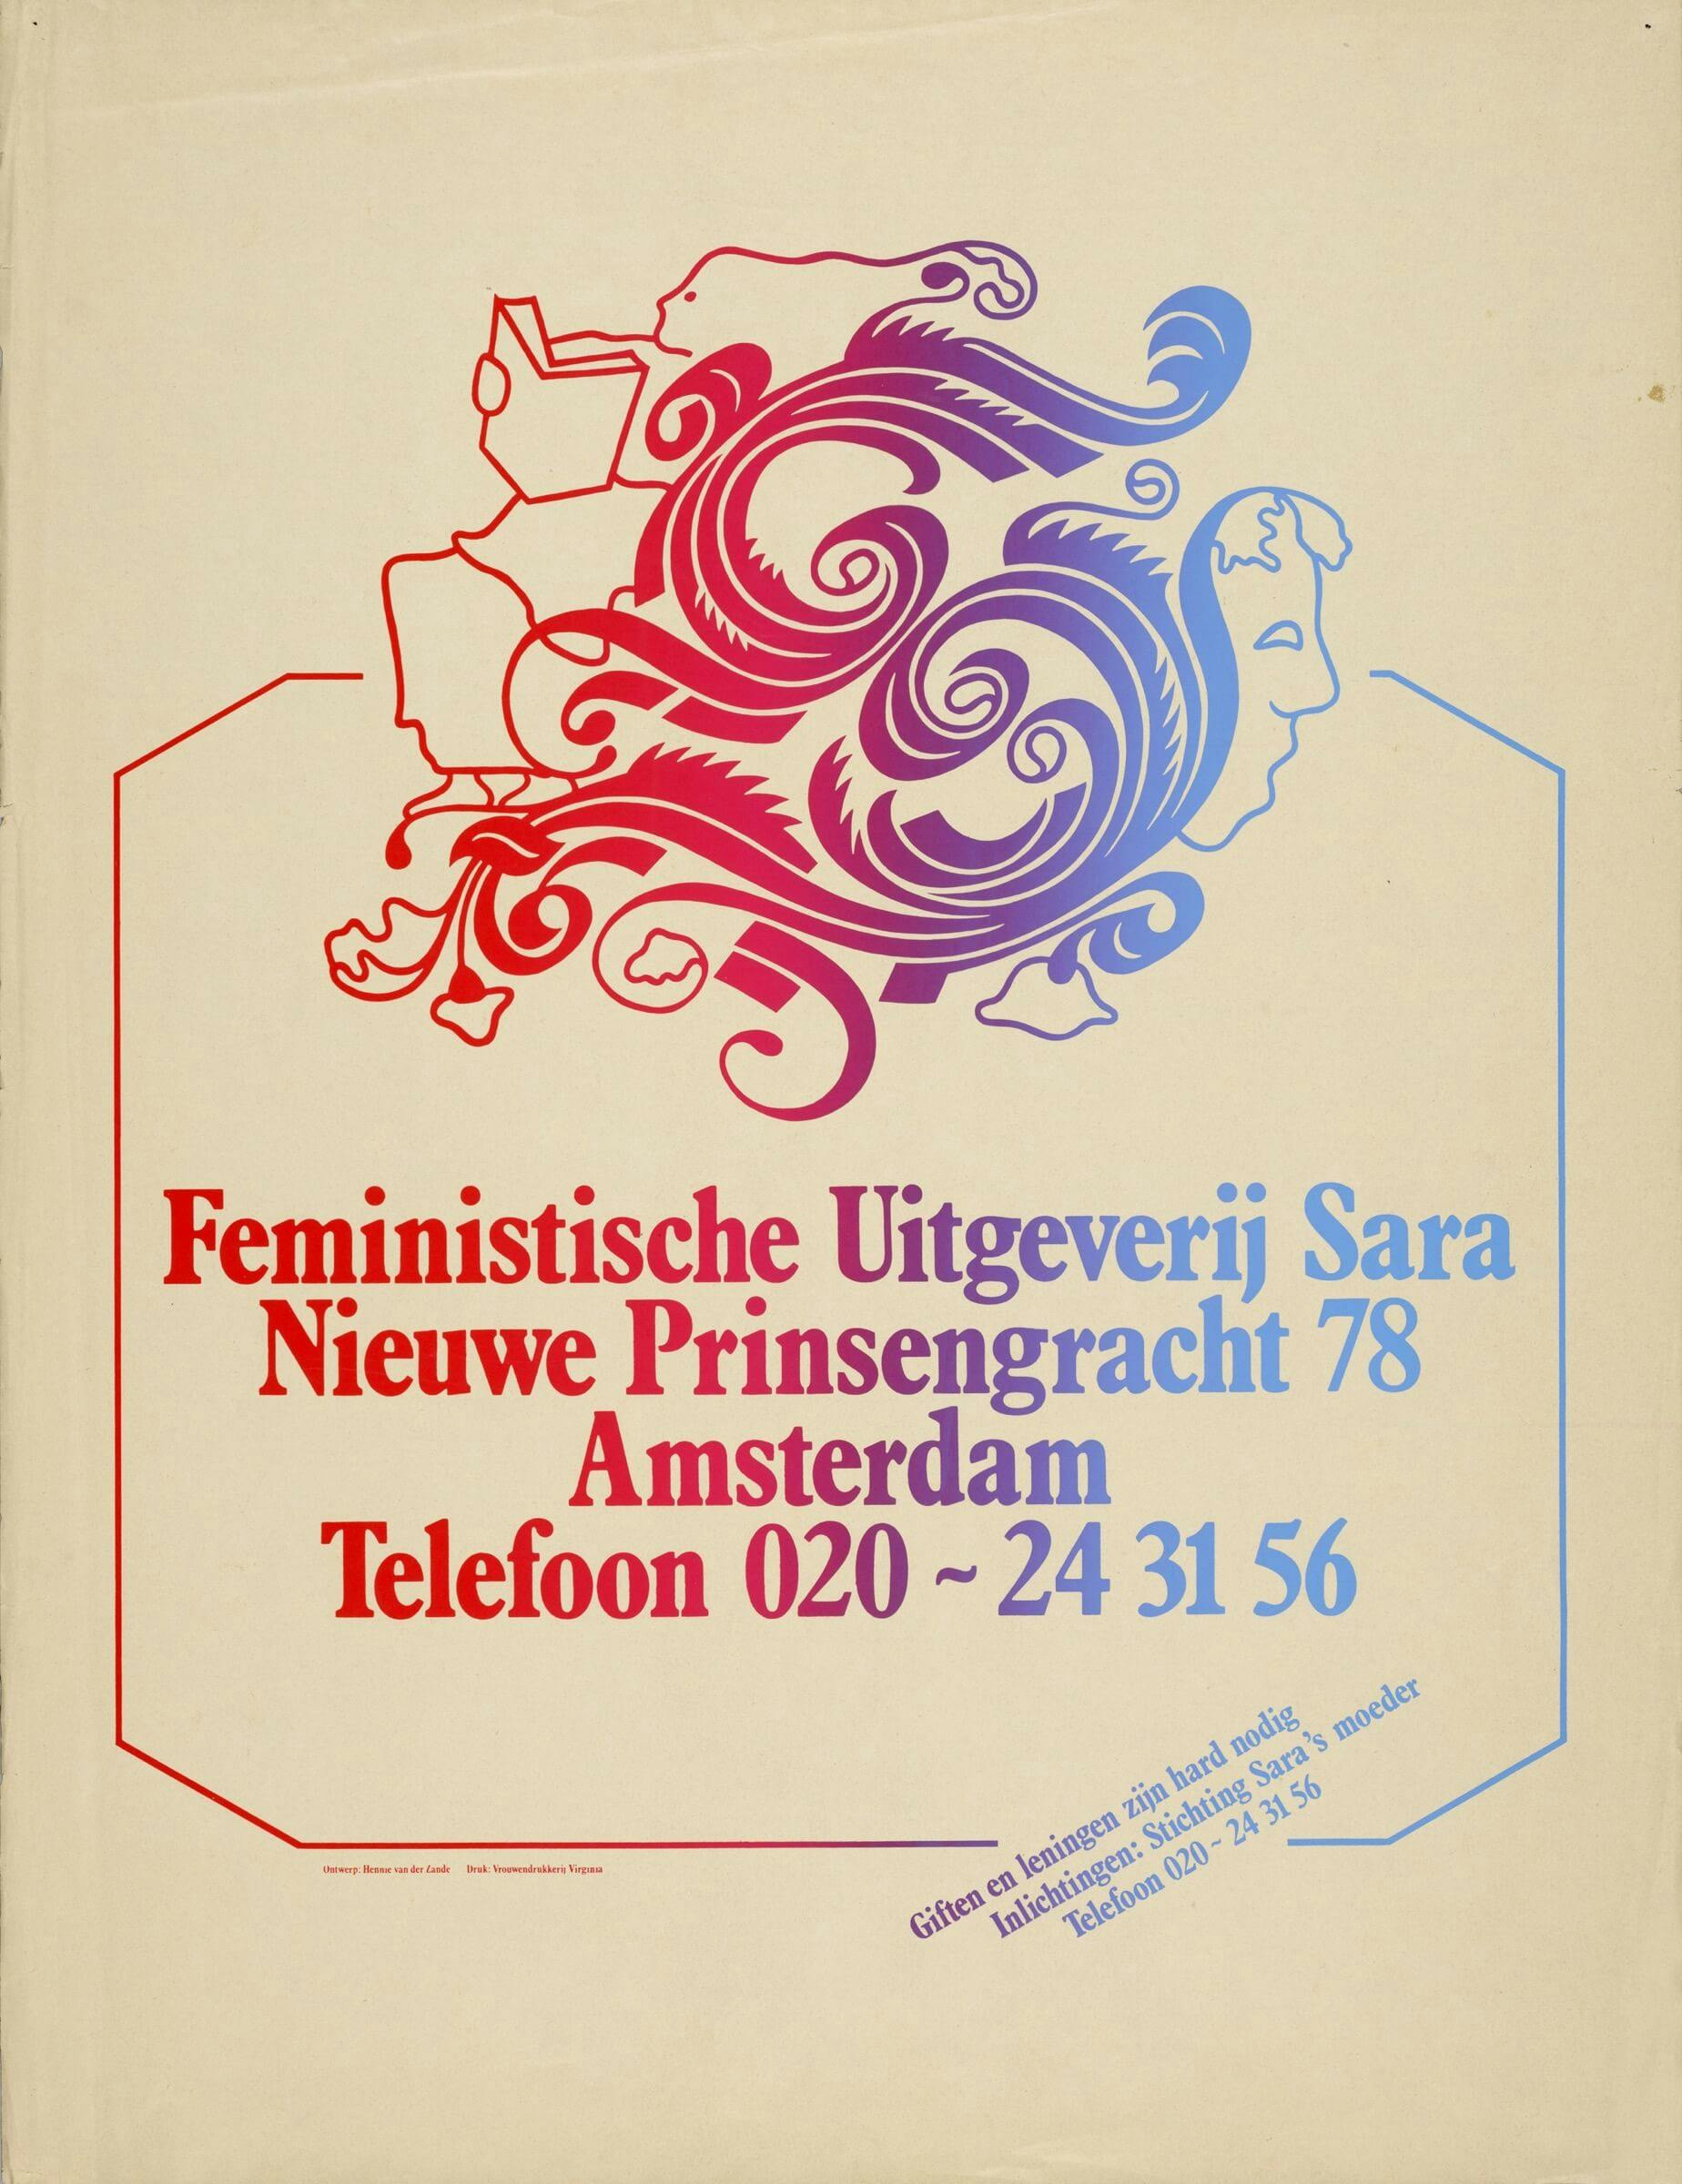 Poster [Sara Feminist Publishing House], 198?, design: Hennie van der Zande. Source: Collection IAV-Atria  